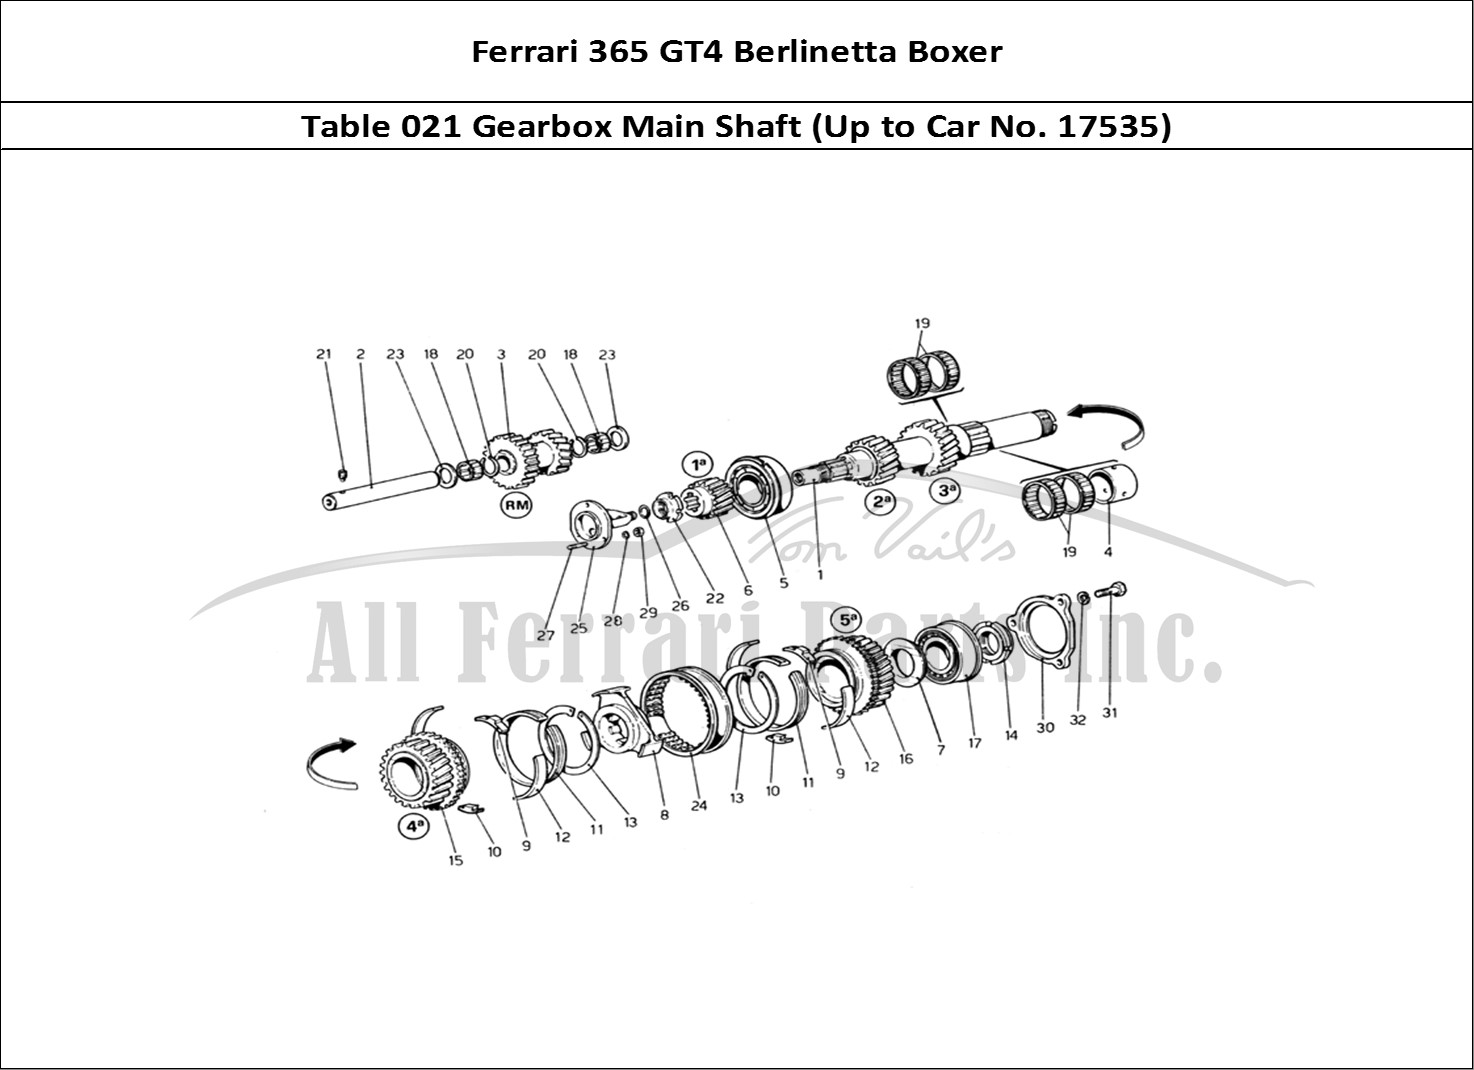 Ferrari Parts Ferrari 365 GT4 Berlinetta Boxer Page 021 Main Shaft Gears (Up To C